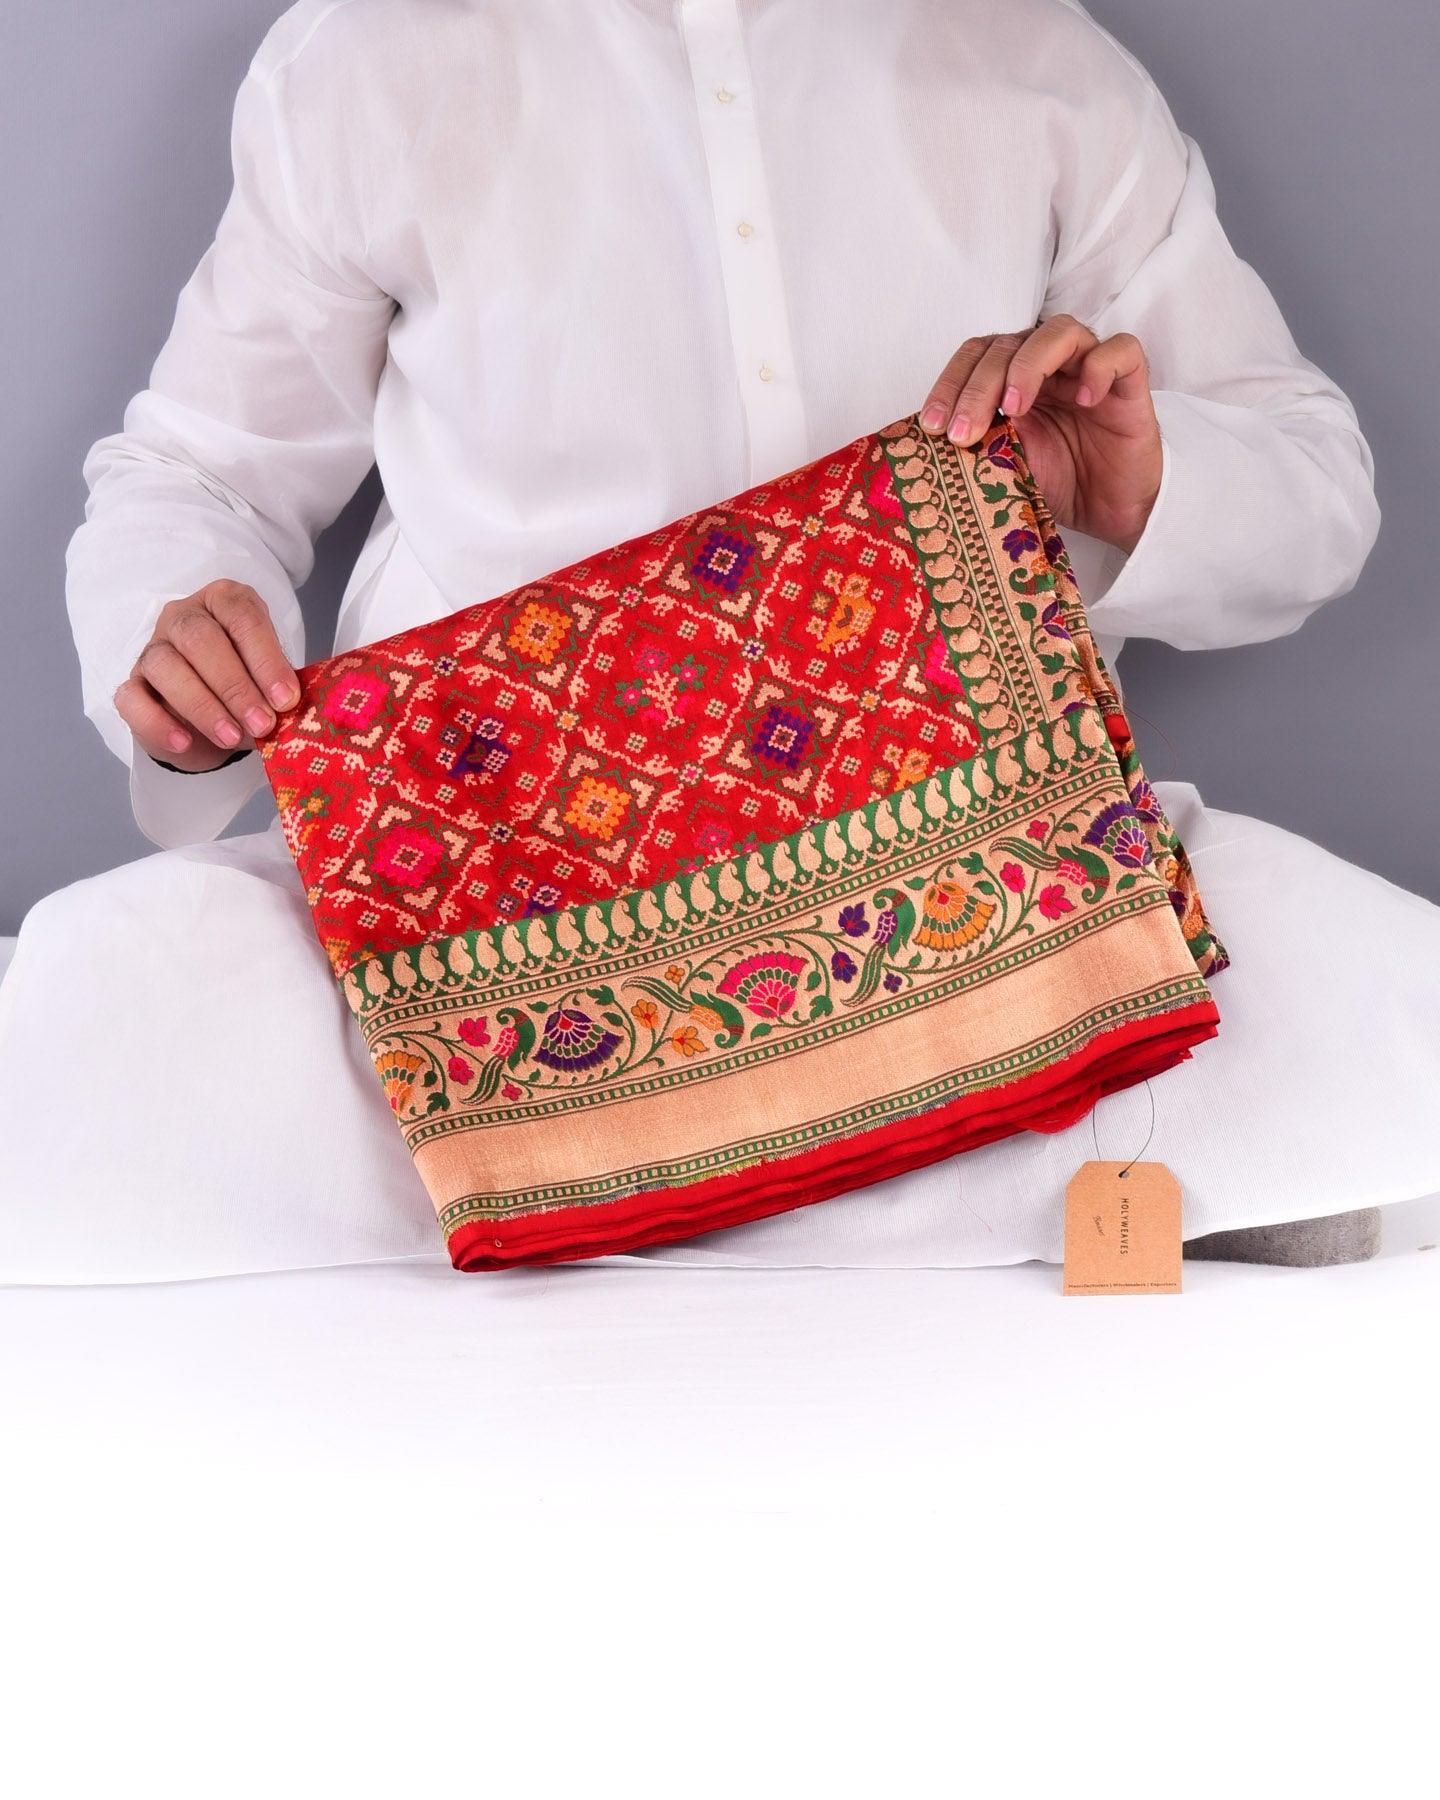 Red Banarasi Patola Cutwork Brocade Handwoven Katan Silk Saree - By HolyWeaves, Benares